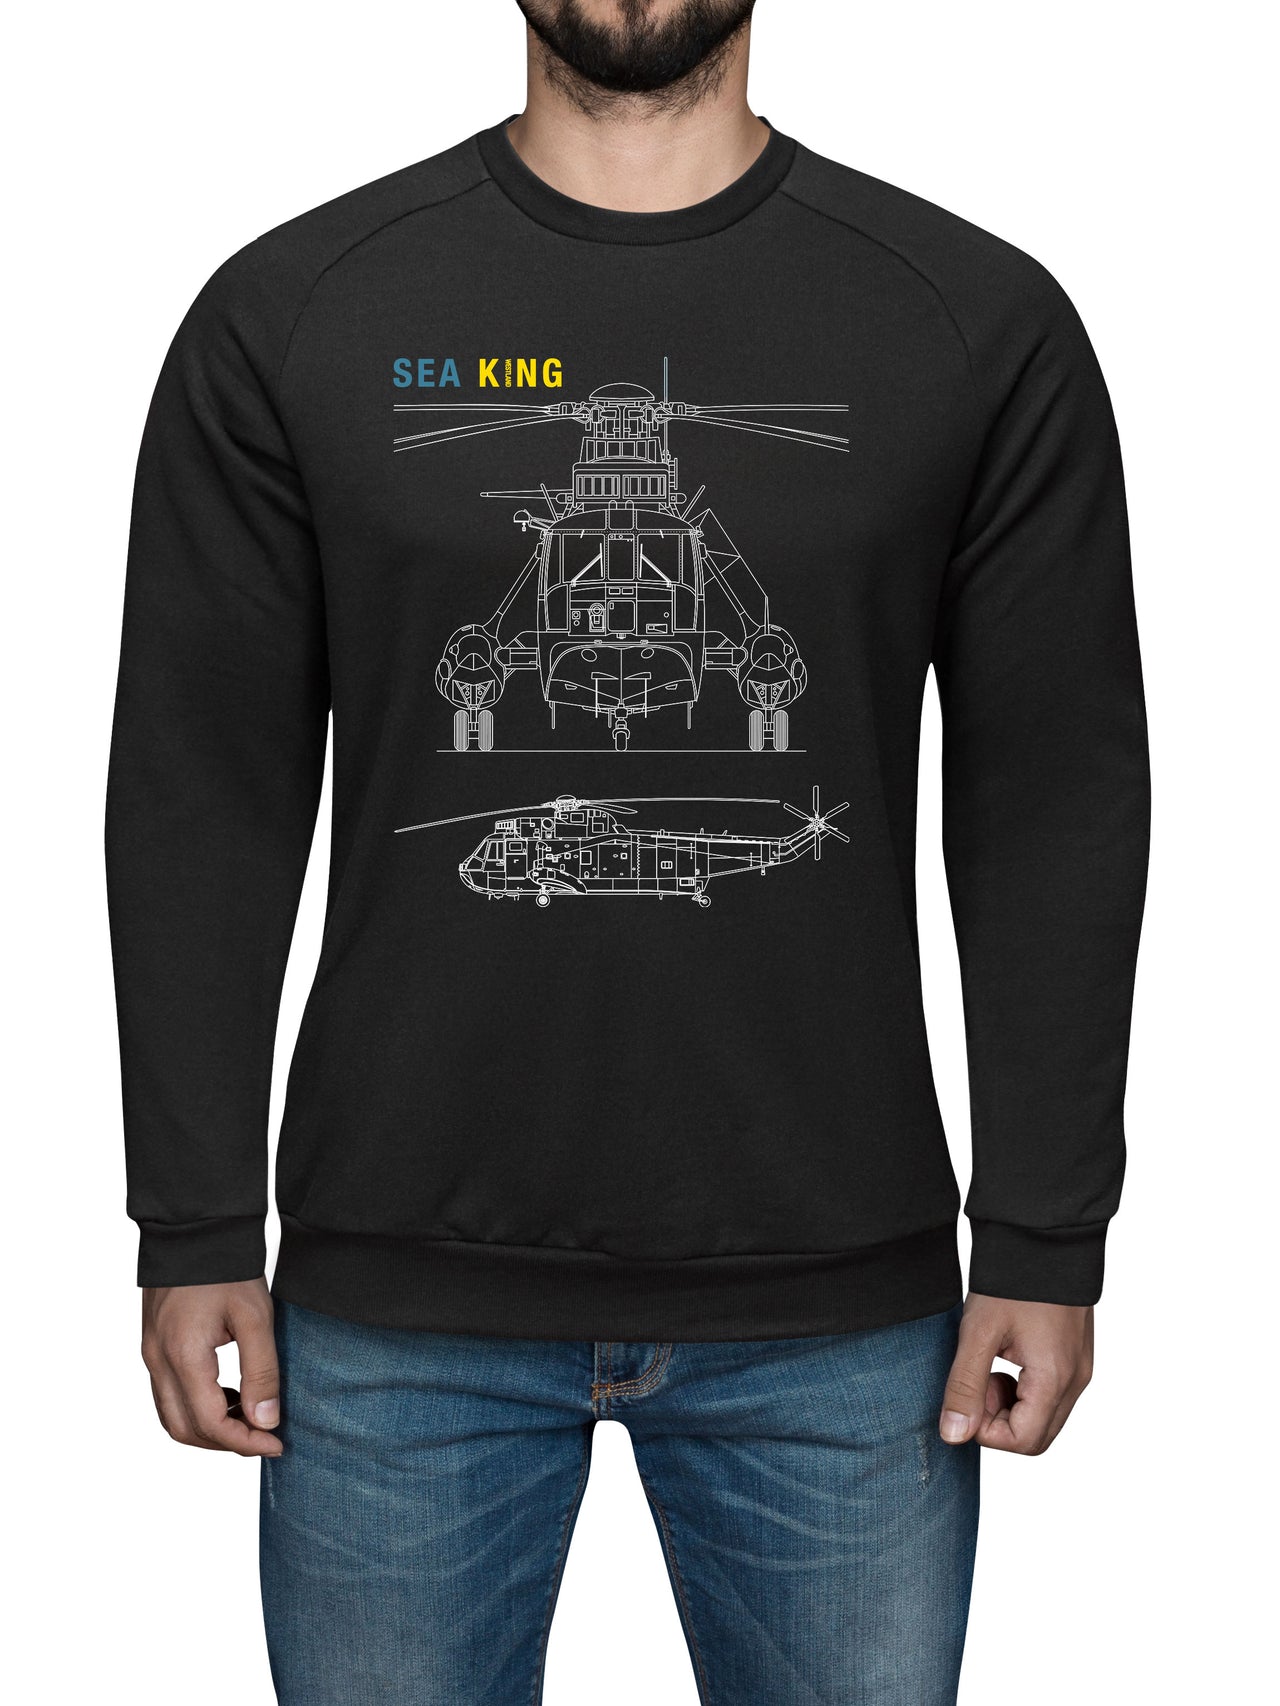 Sea King - Sweat Shirt